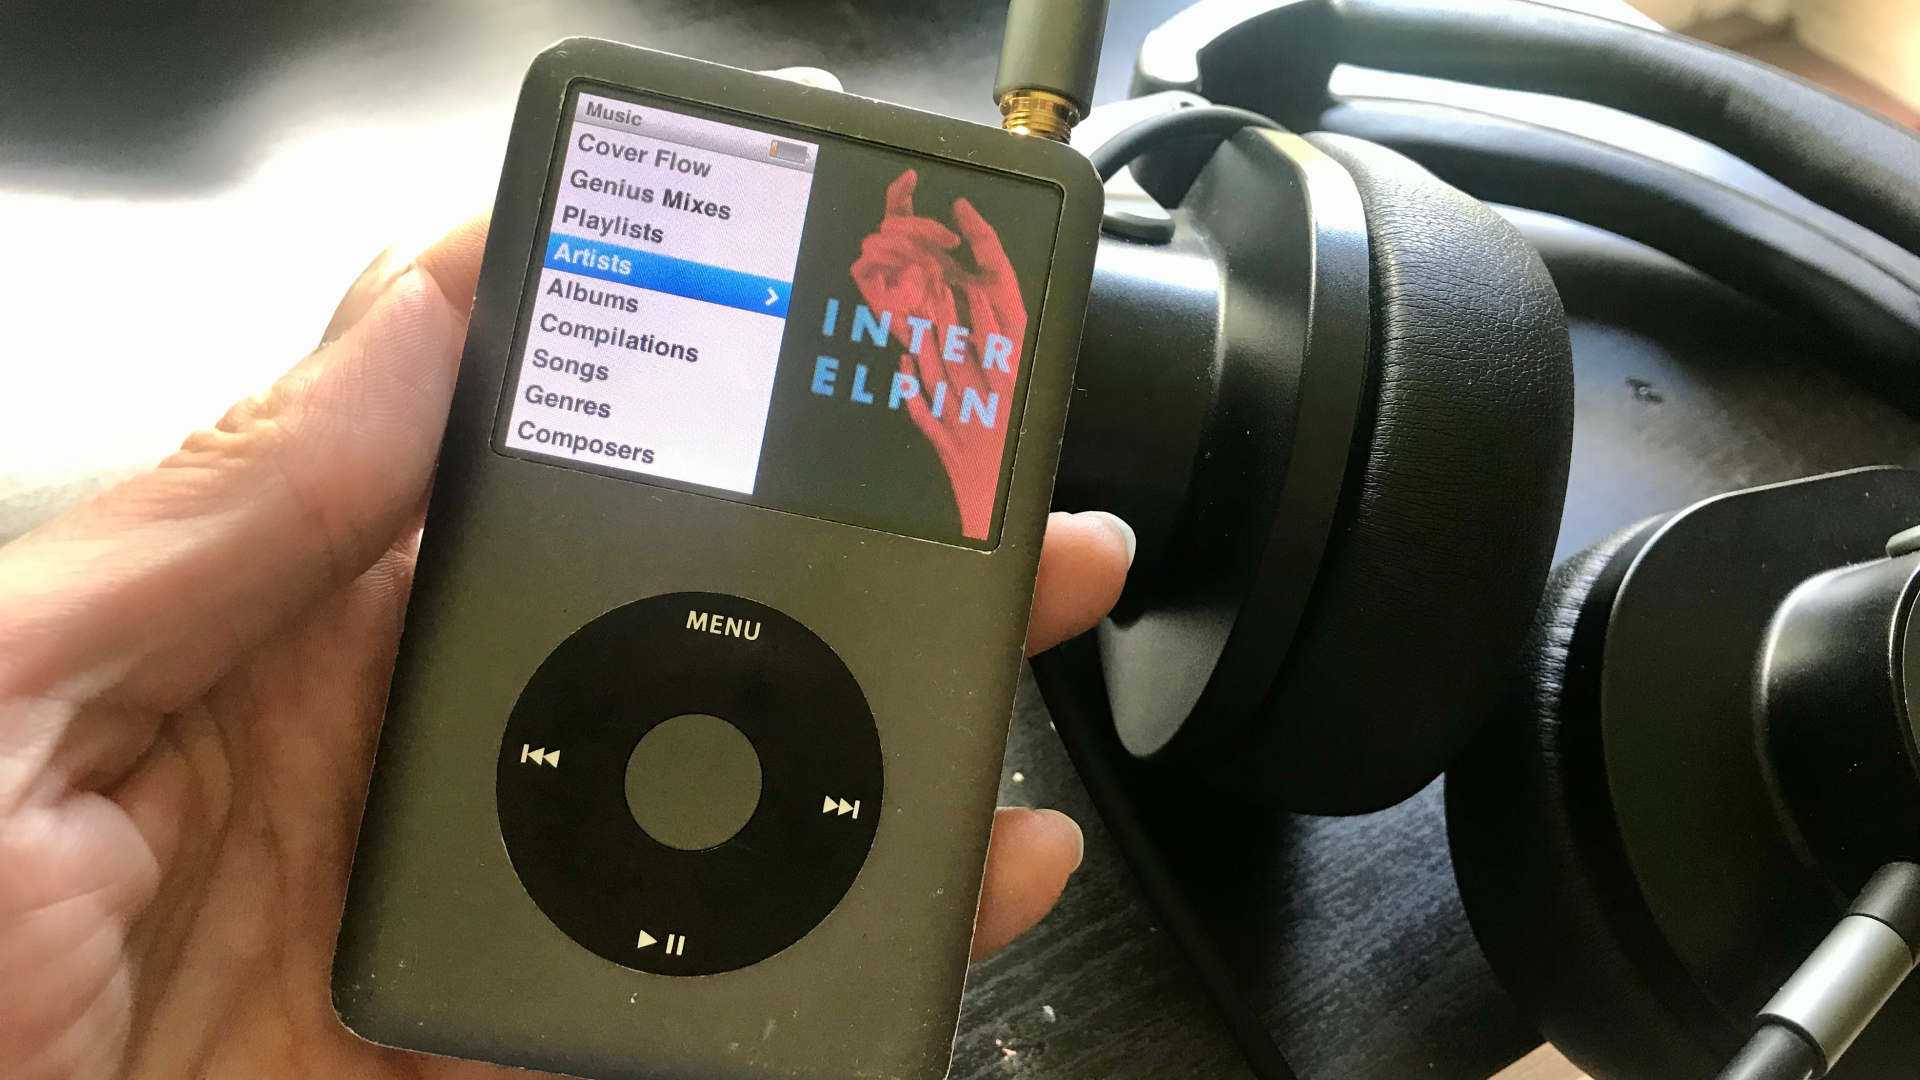 Apple iPod classic 6th generation.